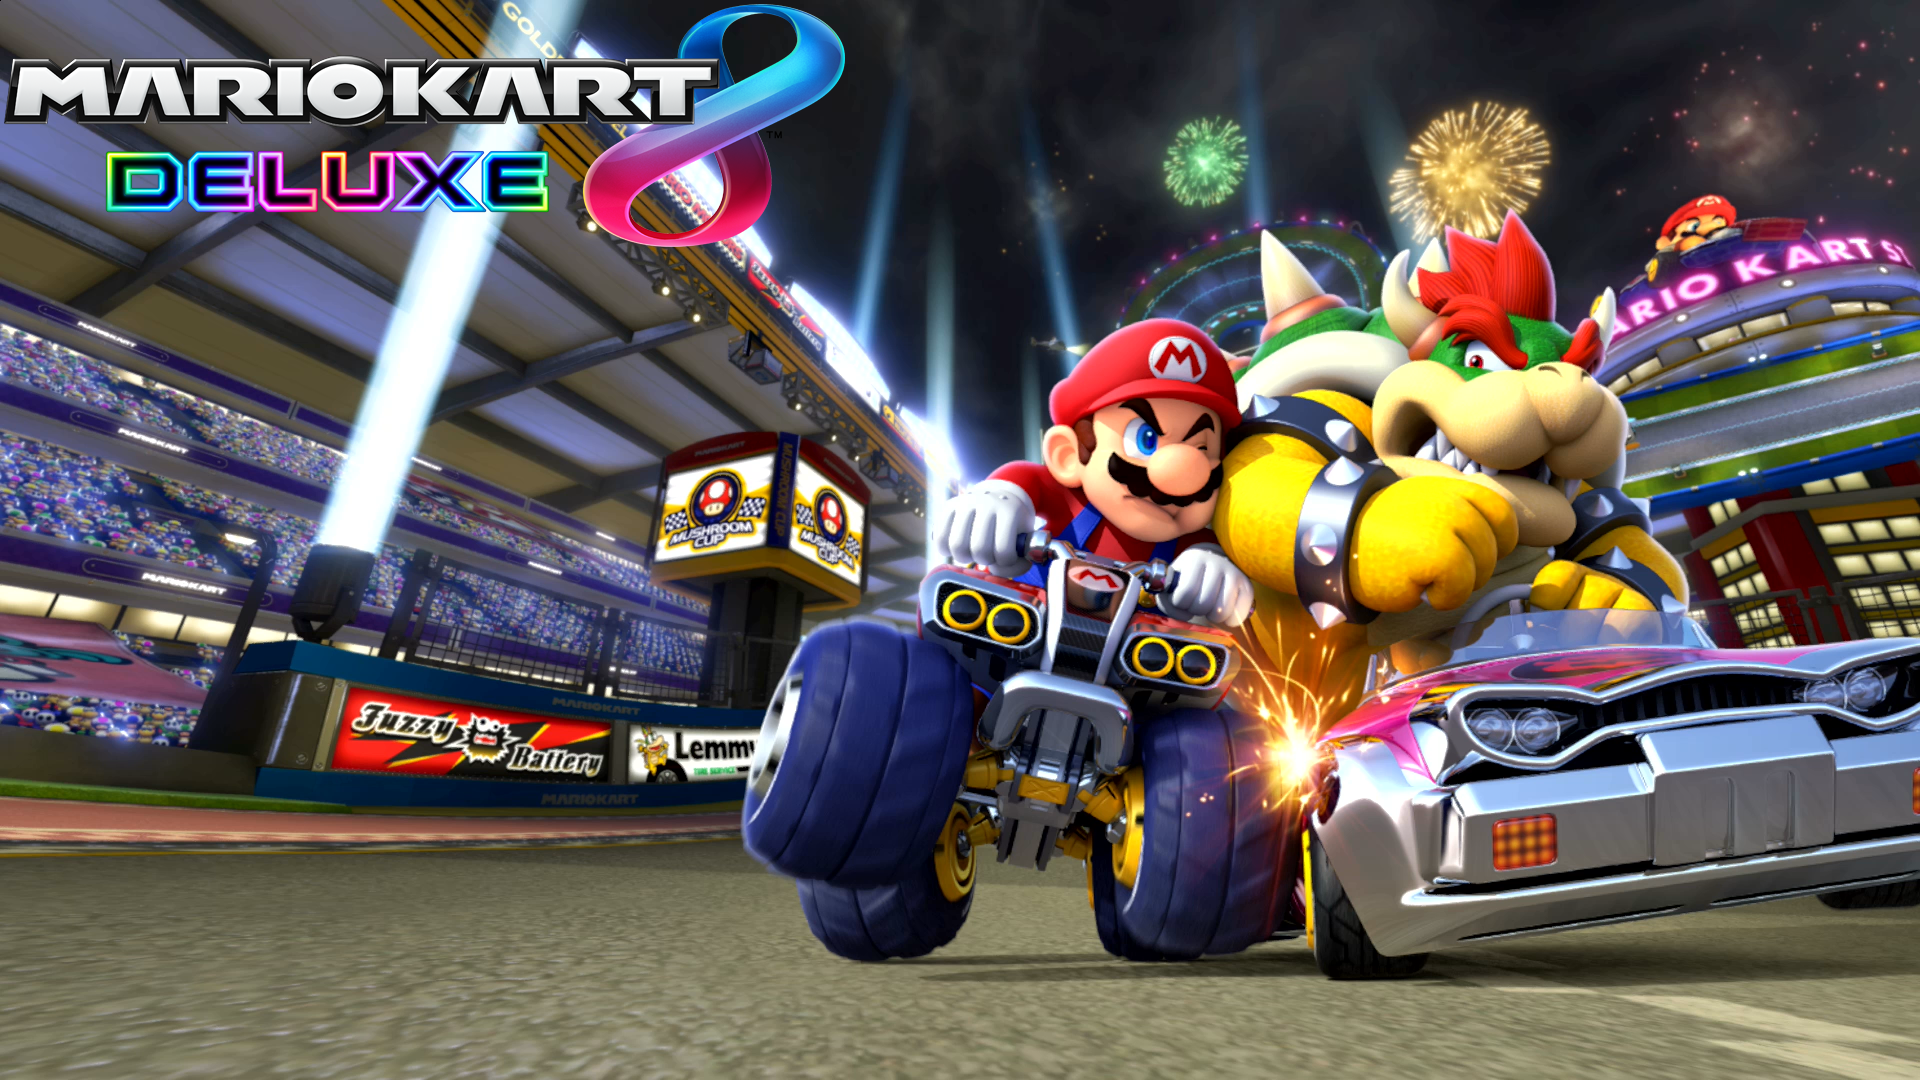 Video Game Mario Kart 8 Deluxe HD Wallpaper | Background Image